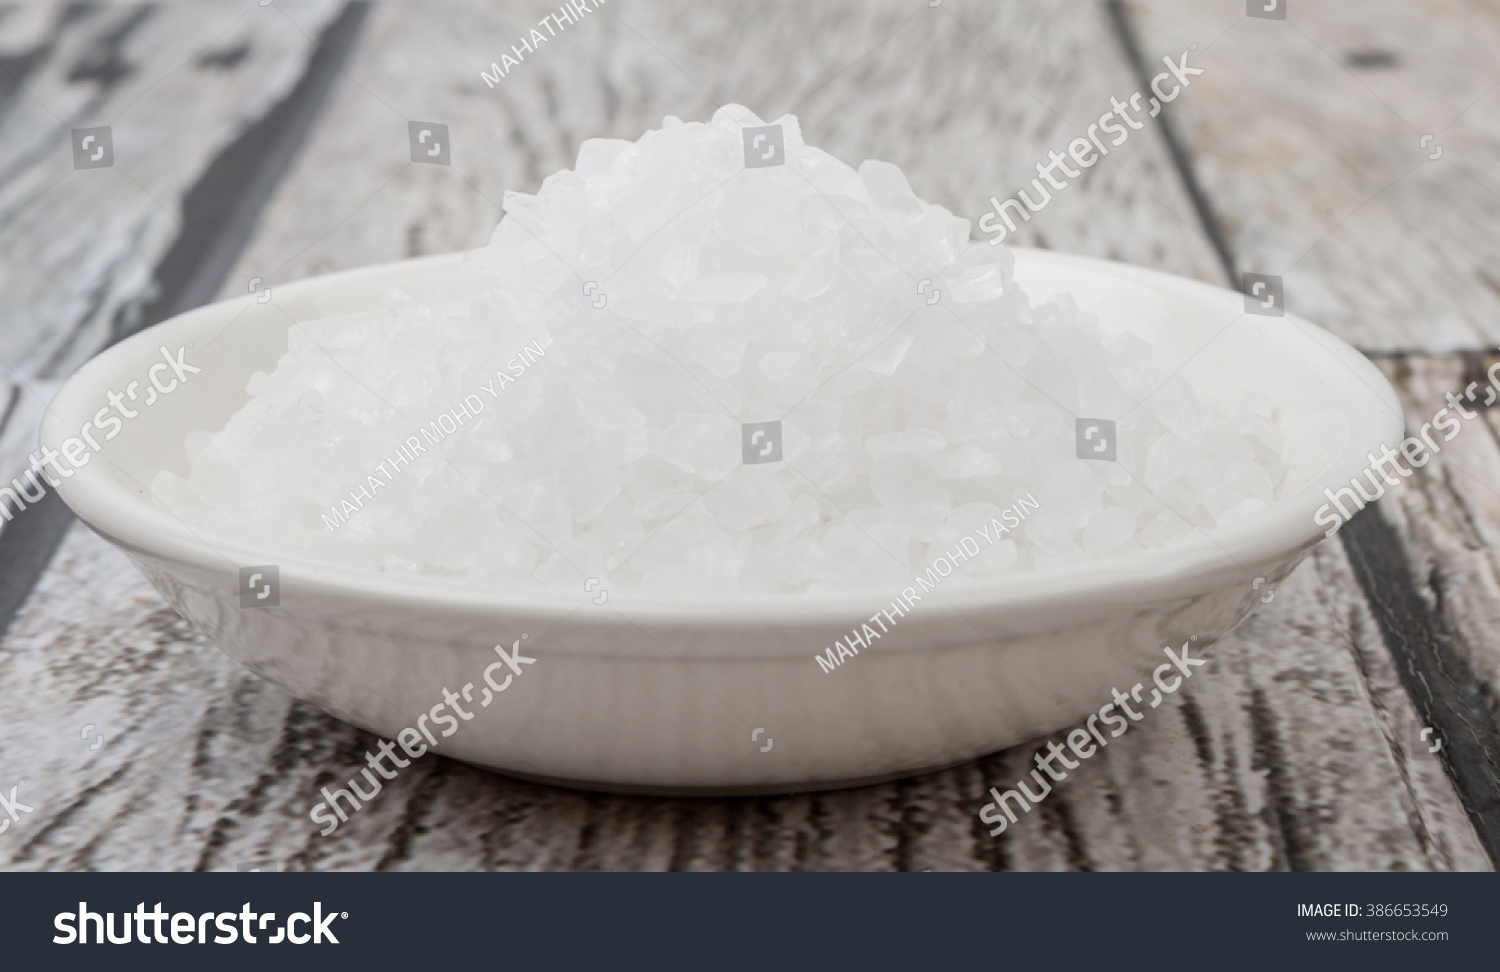 Sea salt in wooden bowl over wooden background #386653549